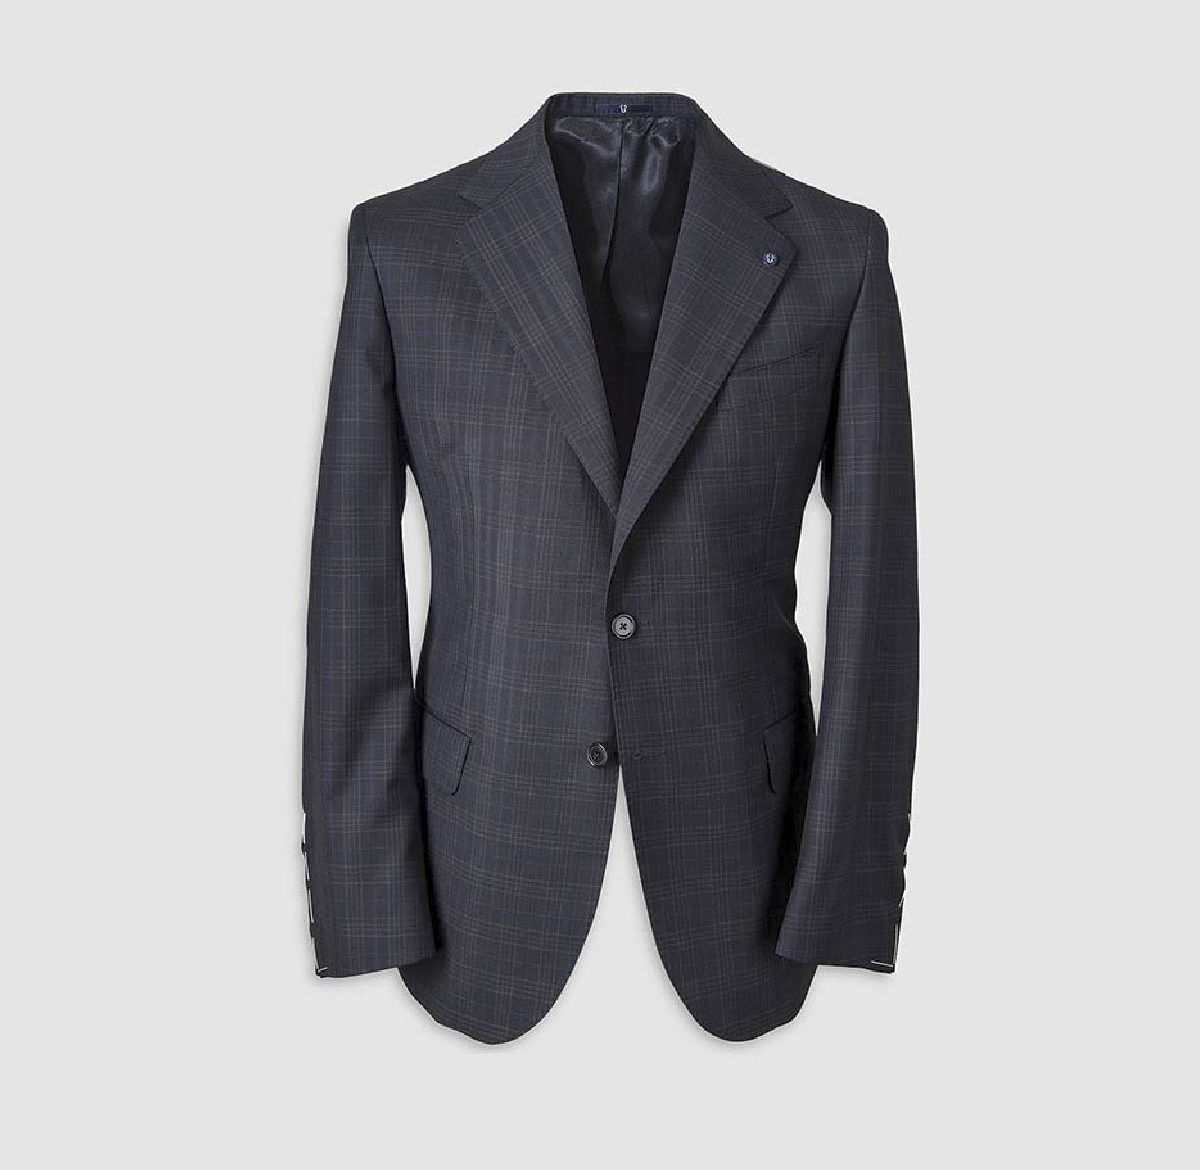 Grey Plaid Check Pattern Blazer in 130s Four Seasons Wool Melillo 1970 on sale 2022